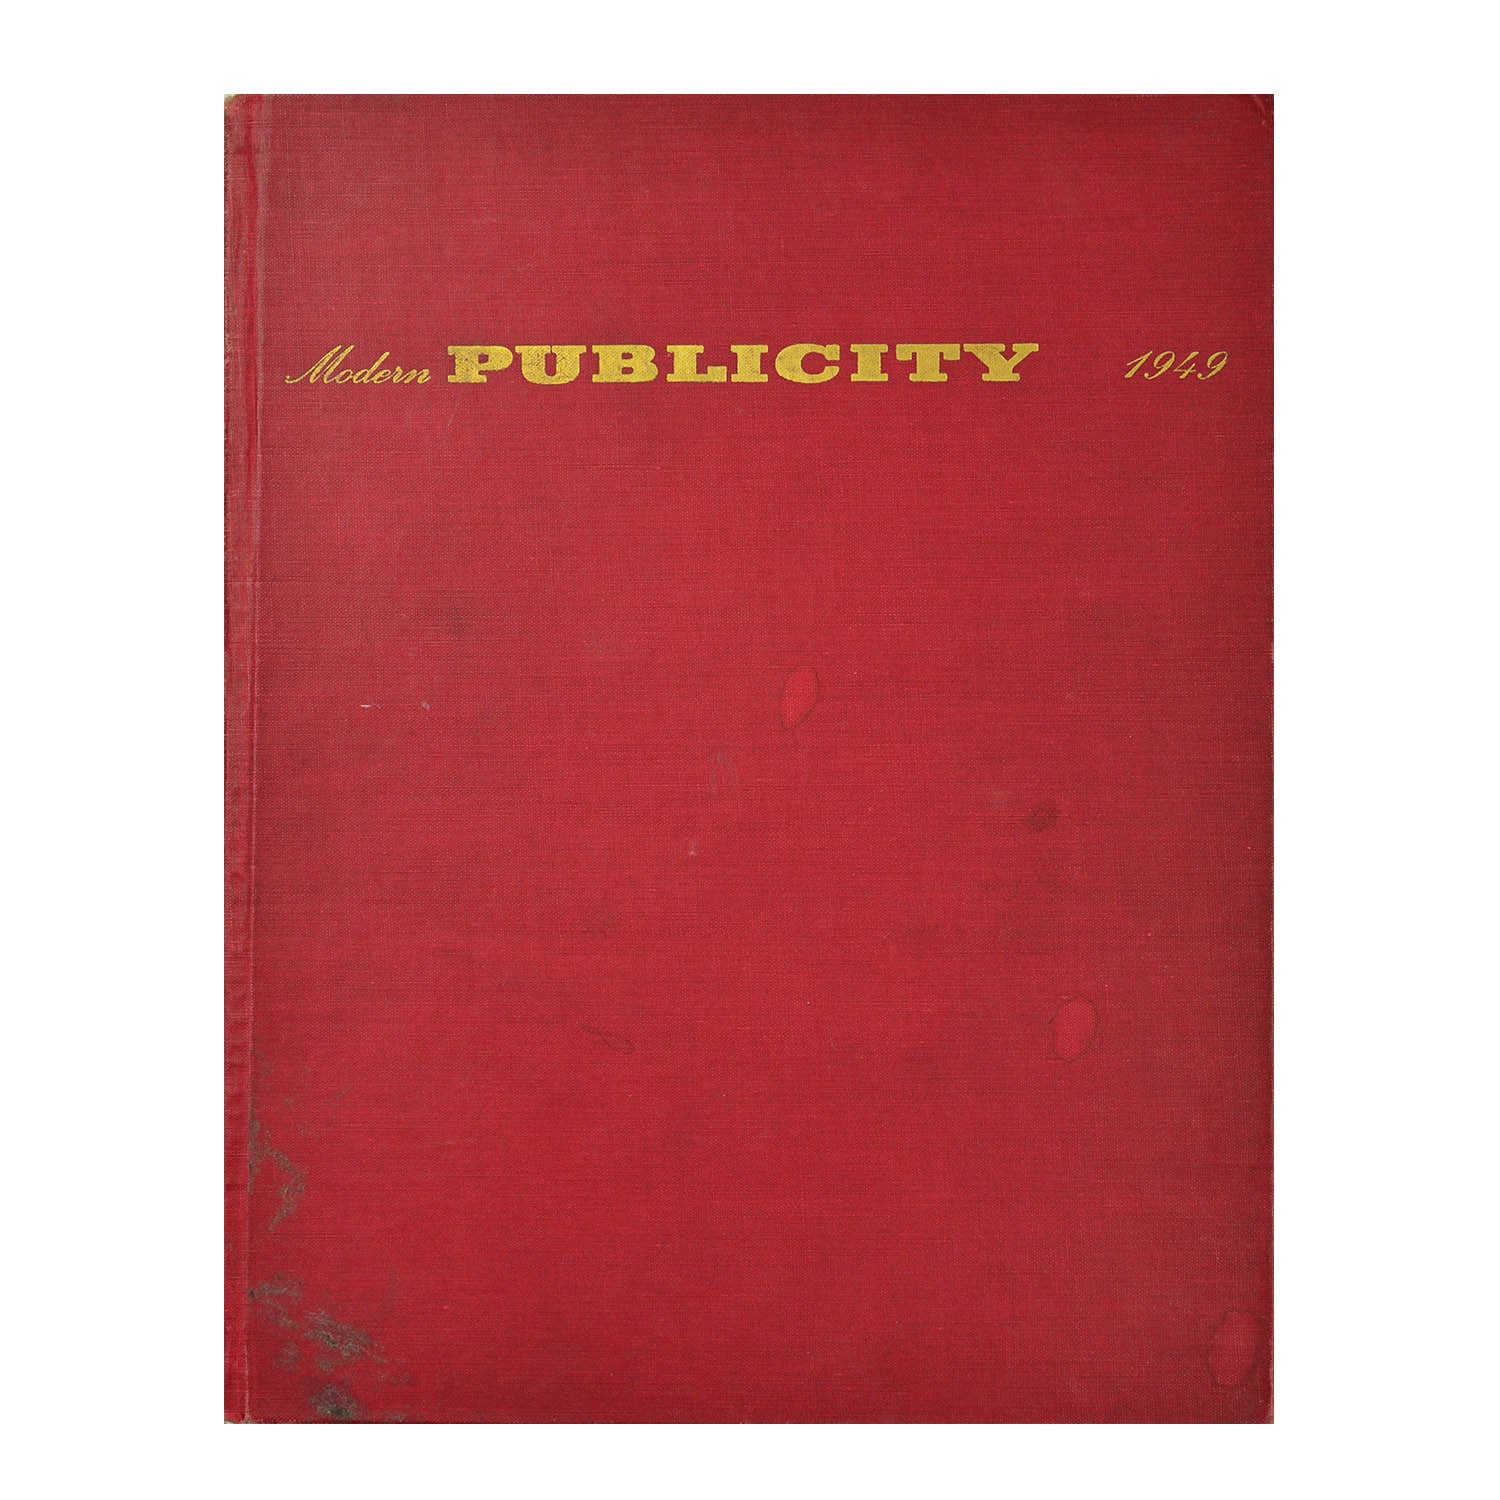 Modern Publicity 1949